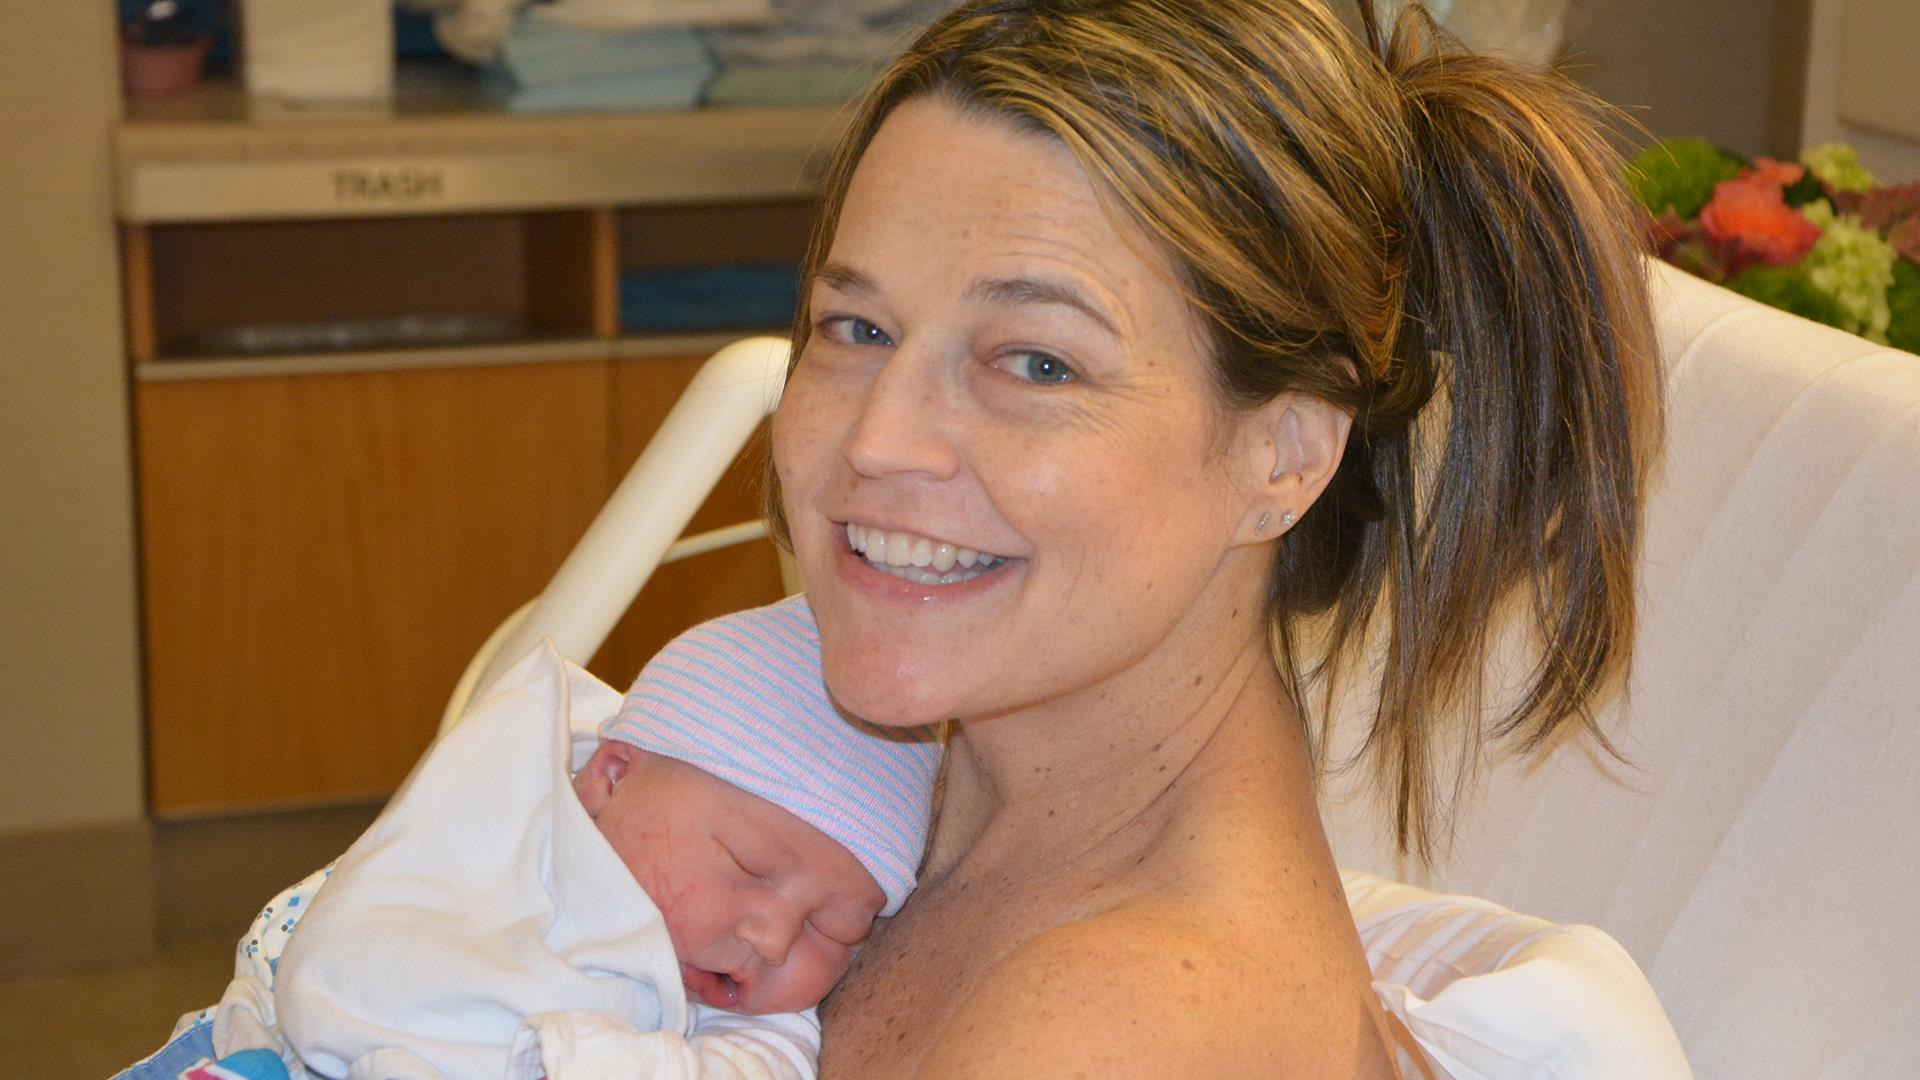 Savannah Guthrie Gives Birth To A Baby Boy